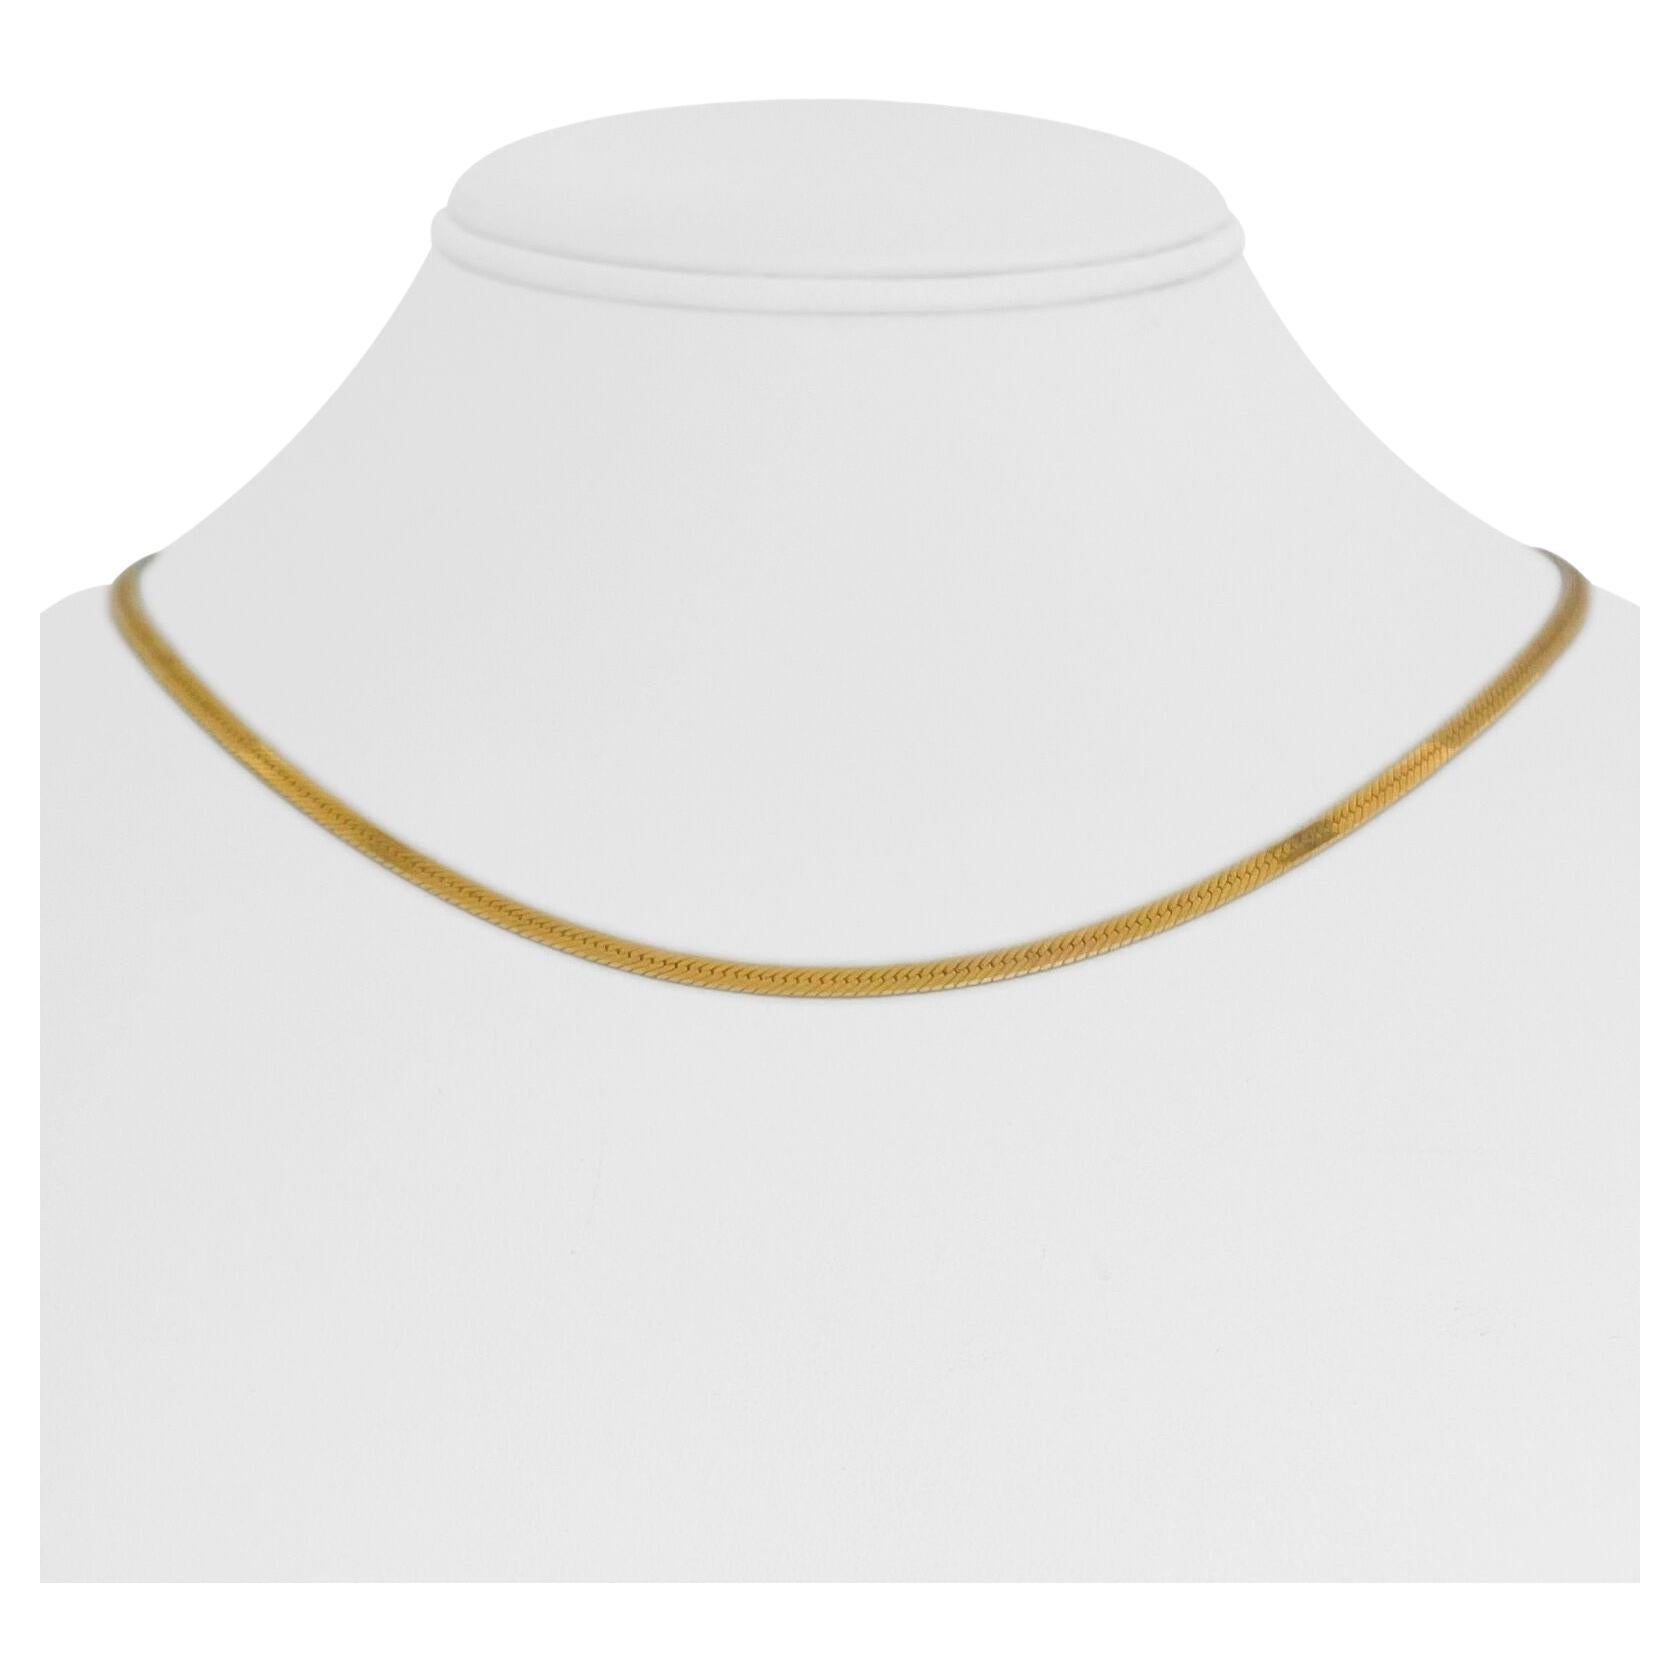 14 Karat Yellow Gold Thin Flat Herringbone Link Chain Necklace Italy